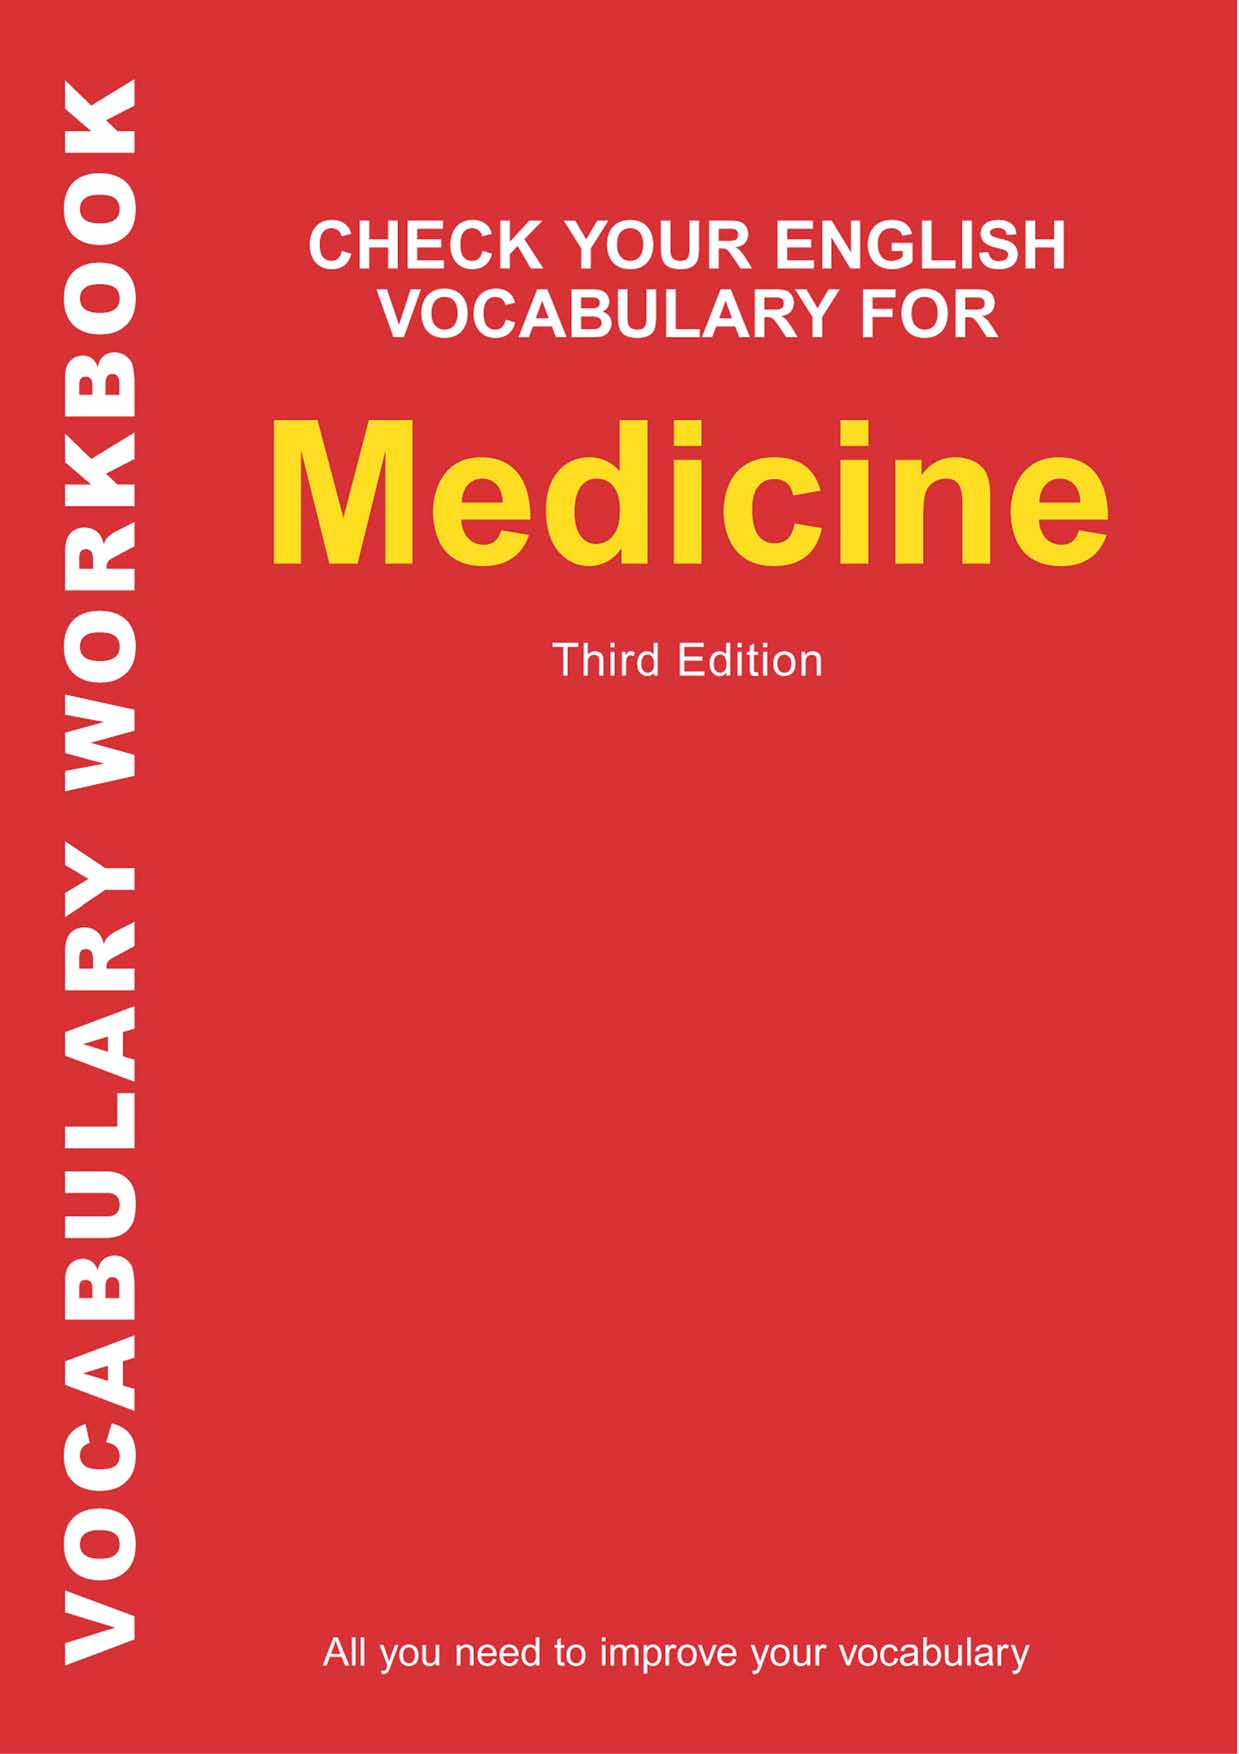 Check Your English Vocabulary for Medicine